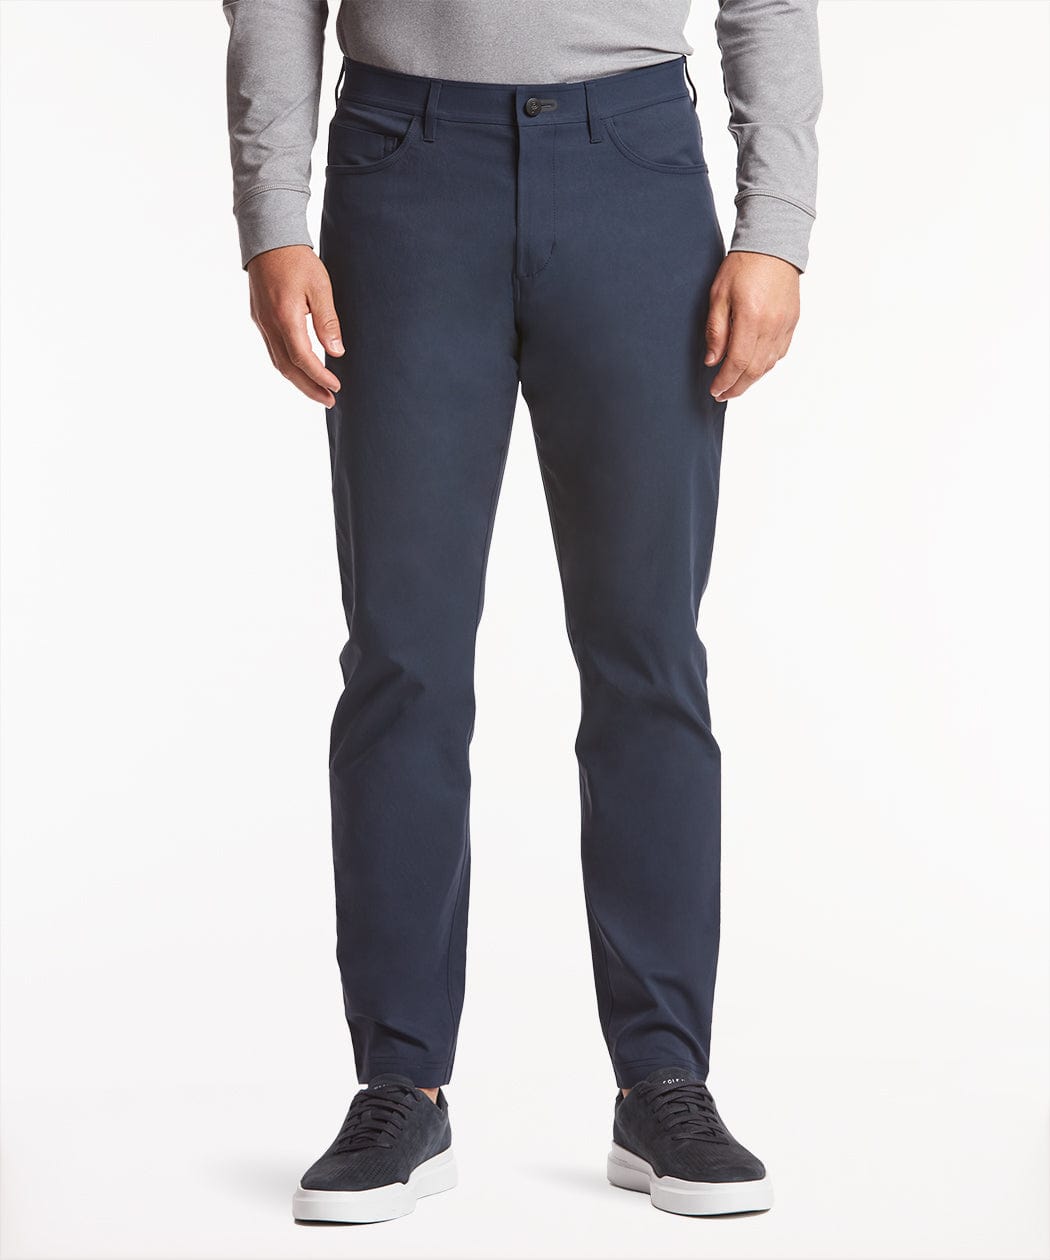 Men's Pants & Joggers  Public Rec® - Now Comfort Looks Good